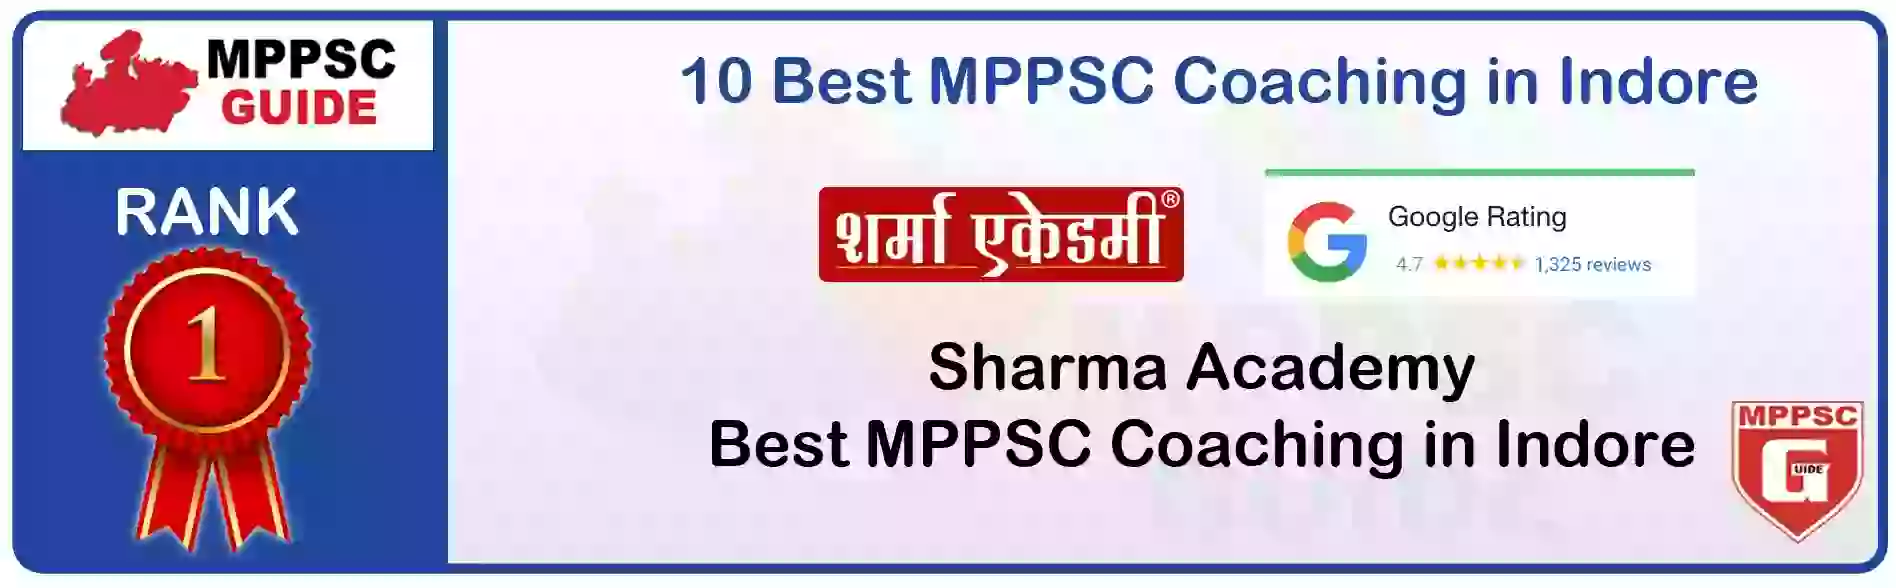 MPPSC Coaching in Neemuch, MPPSC Coaching Institute In Neemuch, Best MPPSC Coaching in Neemuch, Top 10 MPPSC Coaching In Neemuch, best mppsc coaching institute in neemuch, MPPSC Coaching Classes In Neemuch, MPPSC Online Coaching In Neemuch, mppsc coaching in Neemuch bhanwarkua